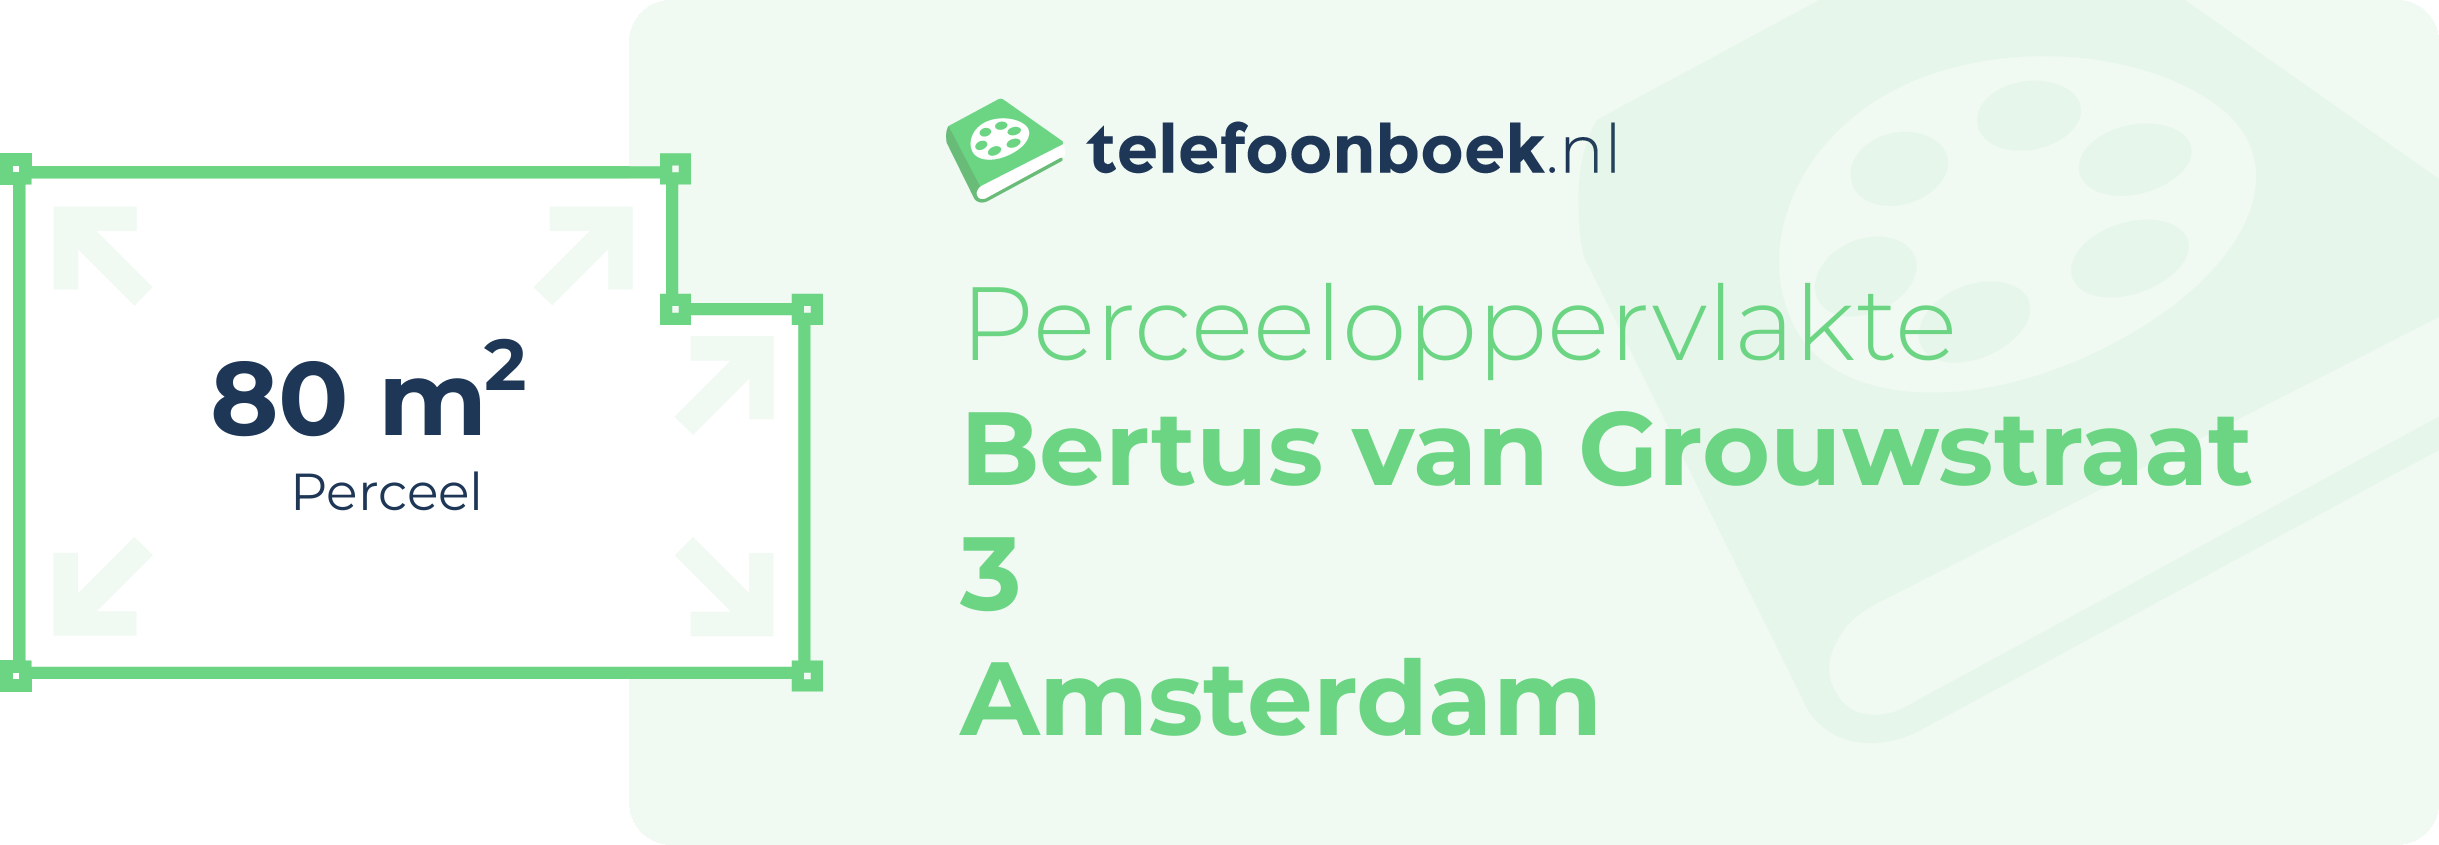 Perceeloppervlakte Bertus Van Grouwstraat 3 Amsterdam